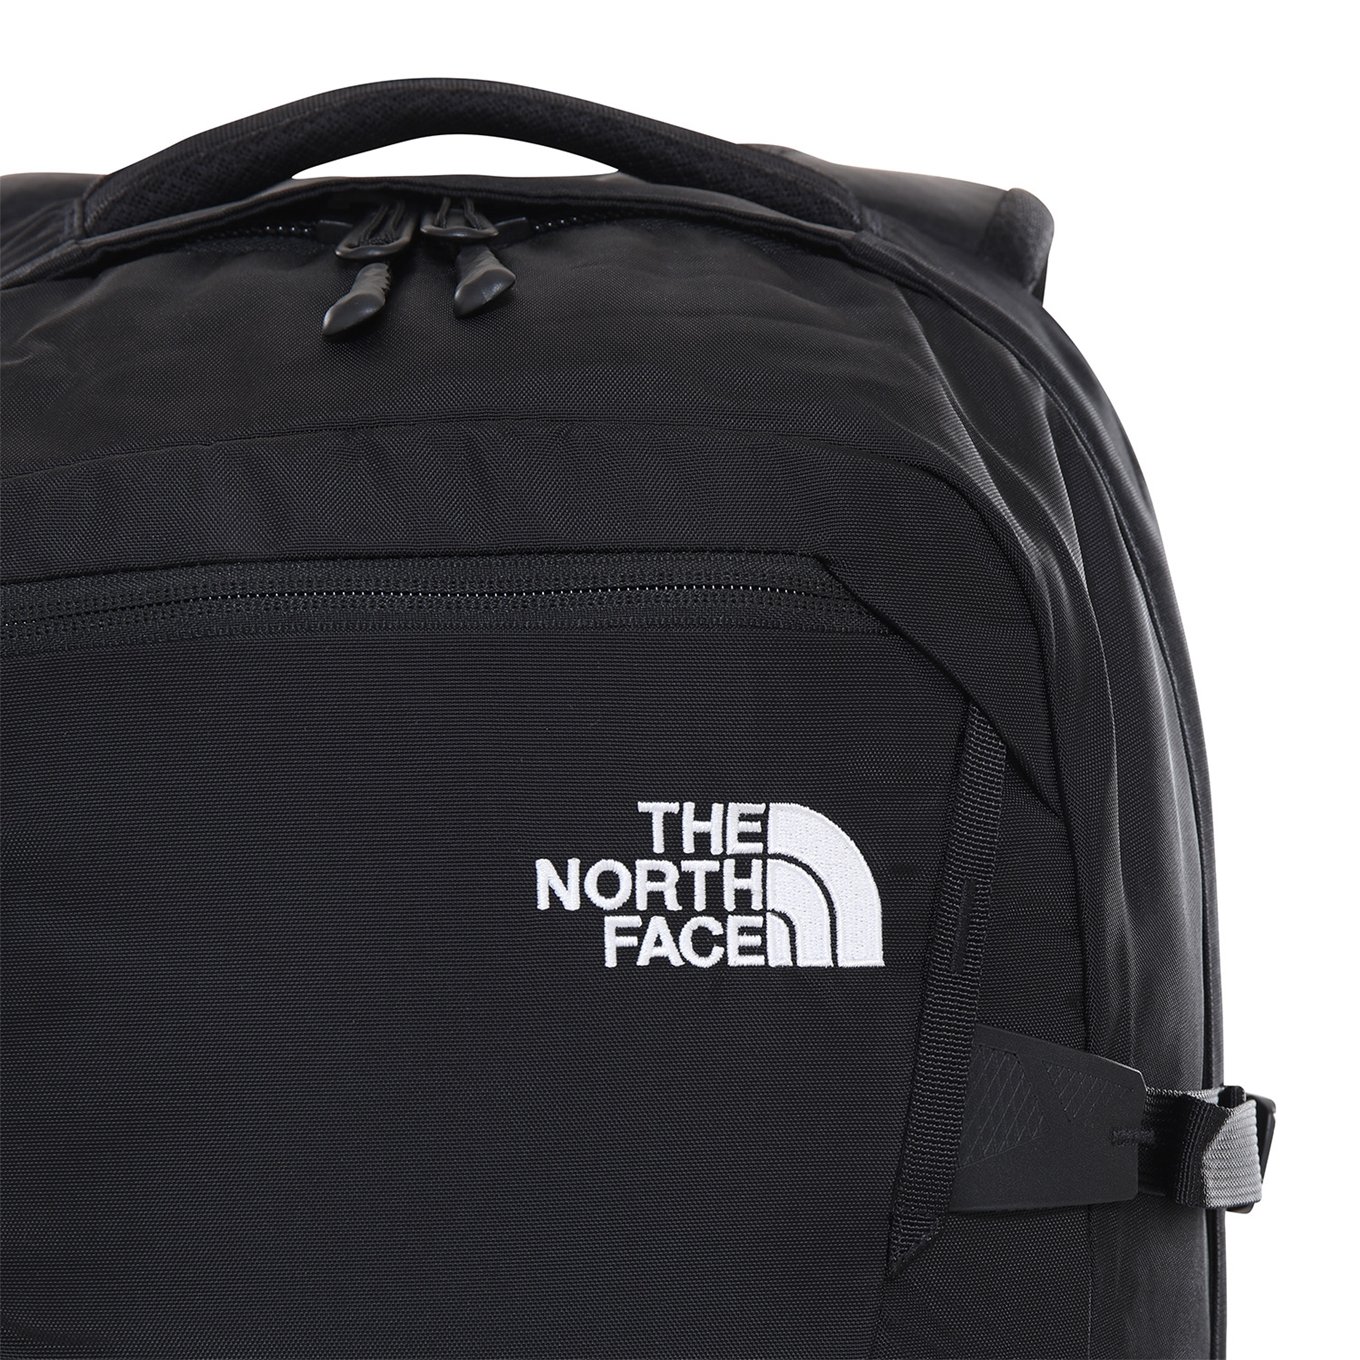 spreiding Negen gewicht The North Face Fall Line black | Travelbags.nl